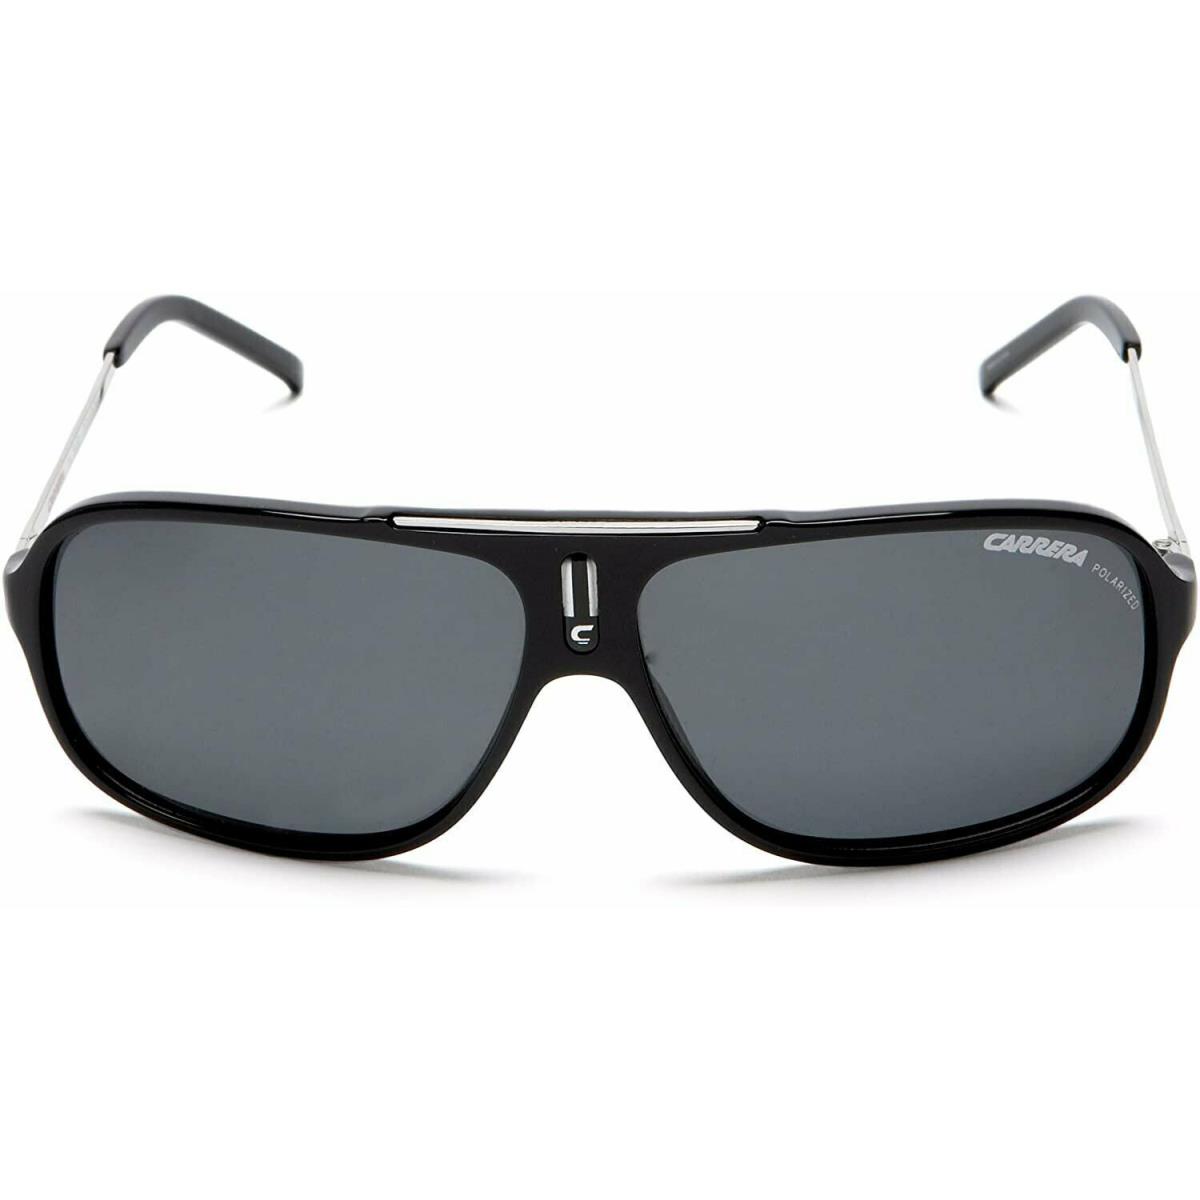 Carrera Polarized Pilot Sunglasses Black and Palladium 65 mm